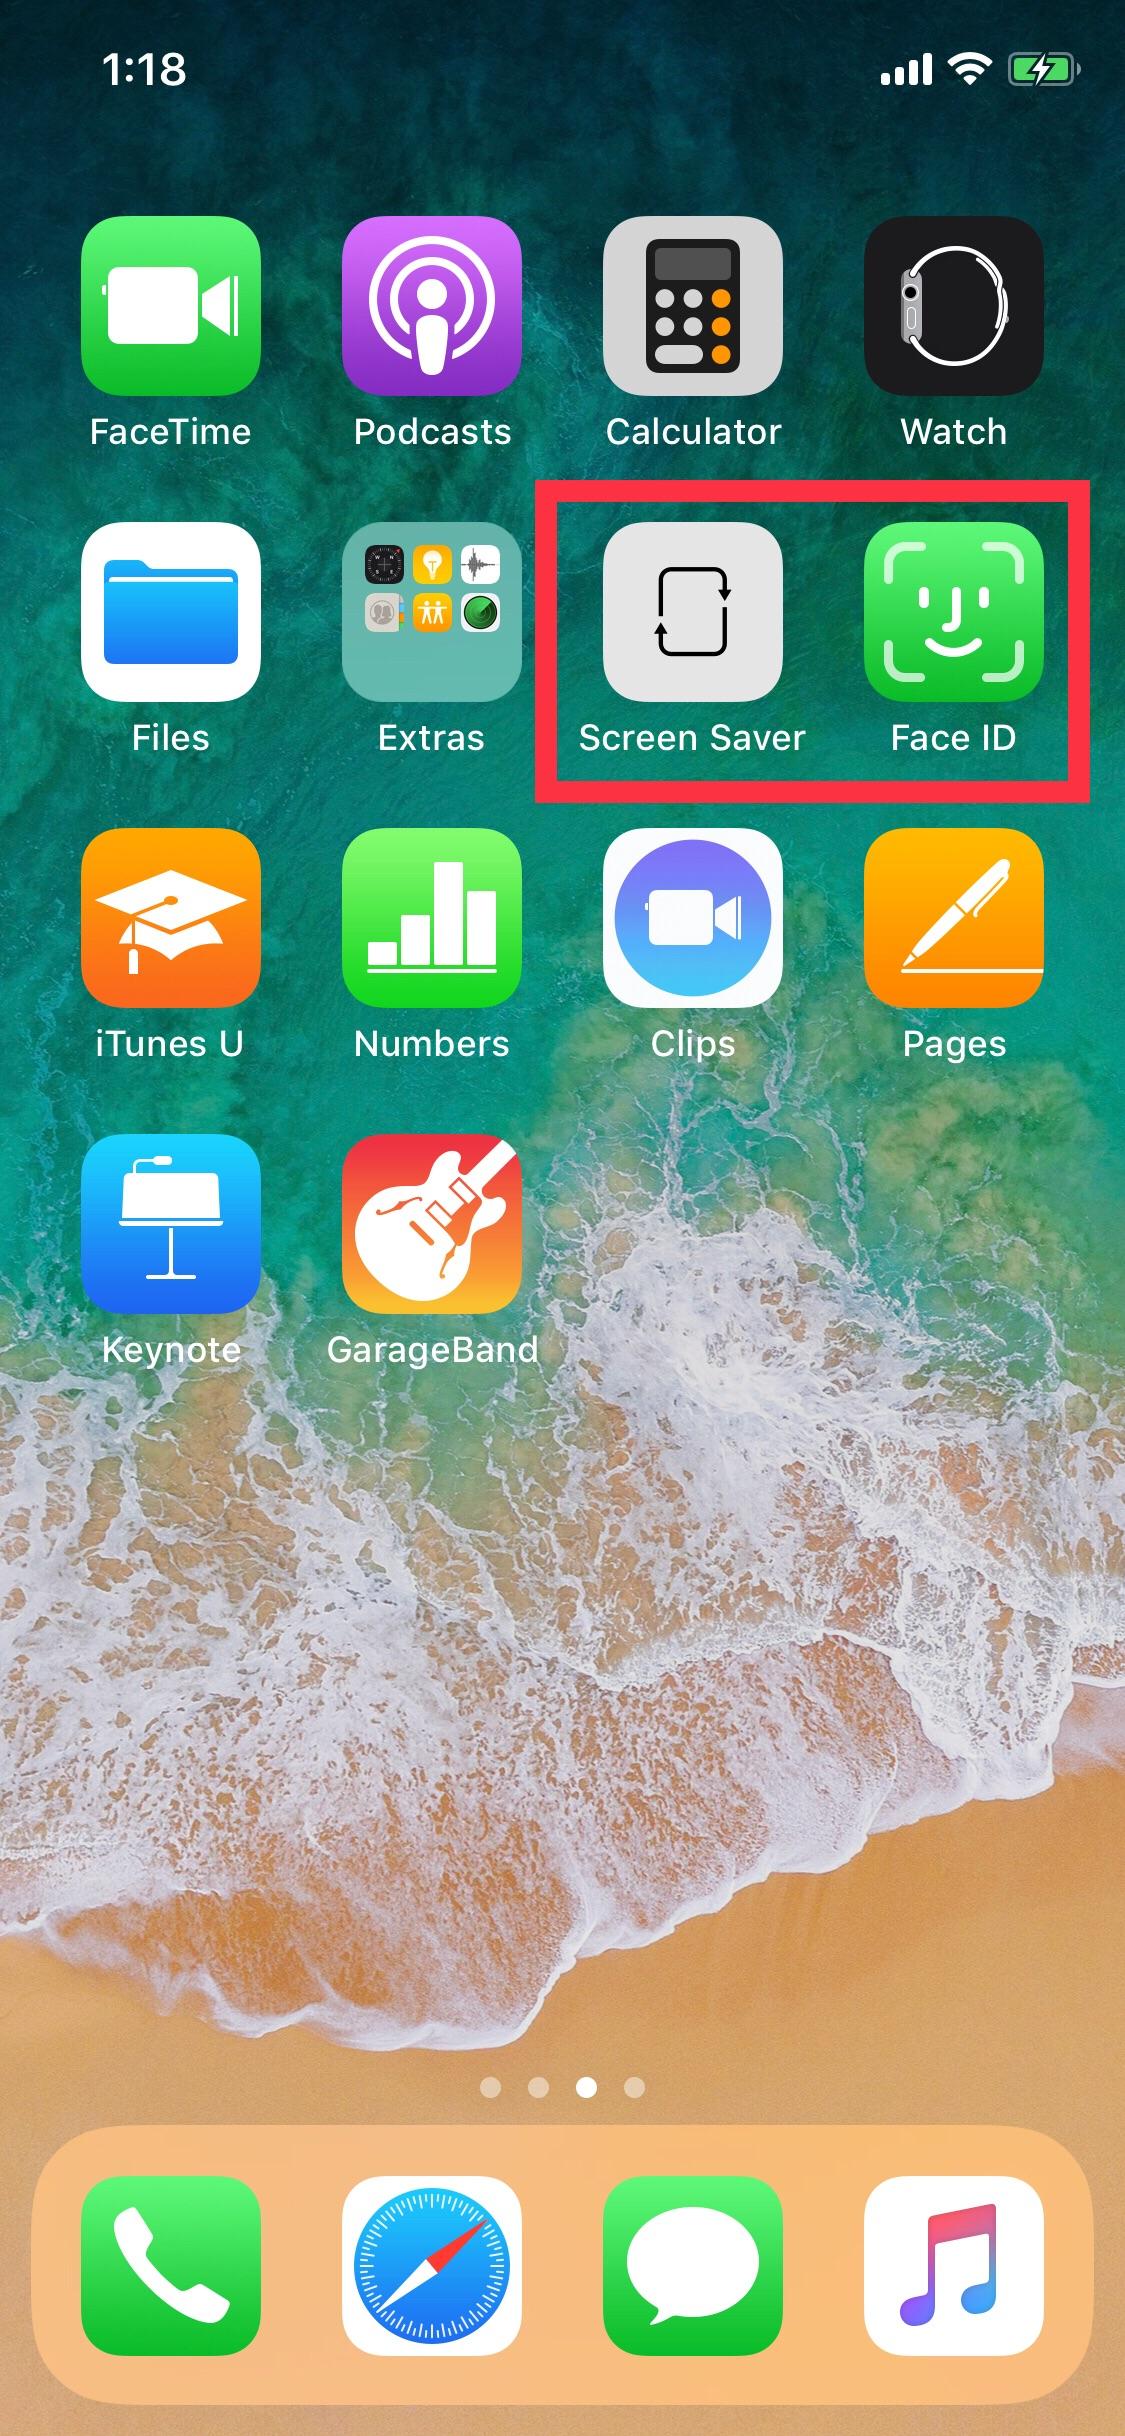 Screen Saver On Iphone Apple Community